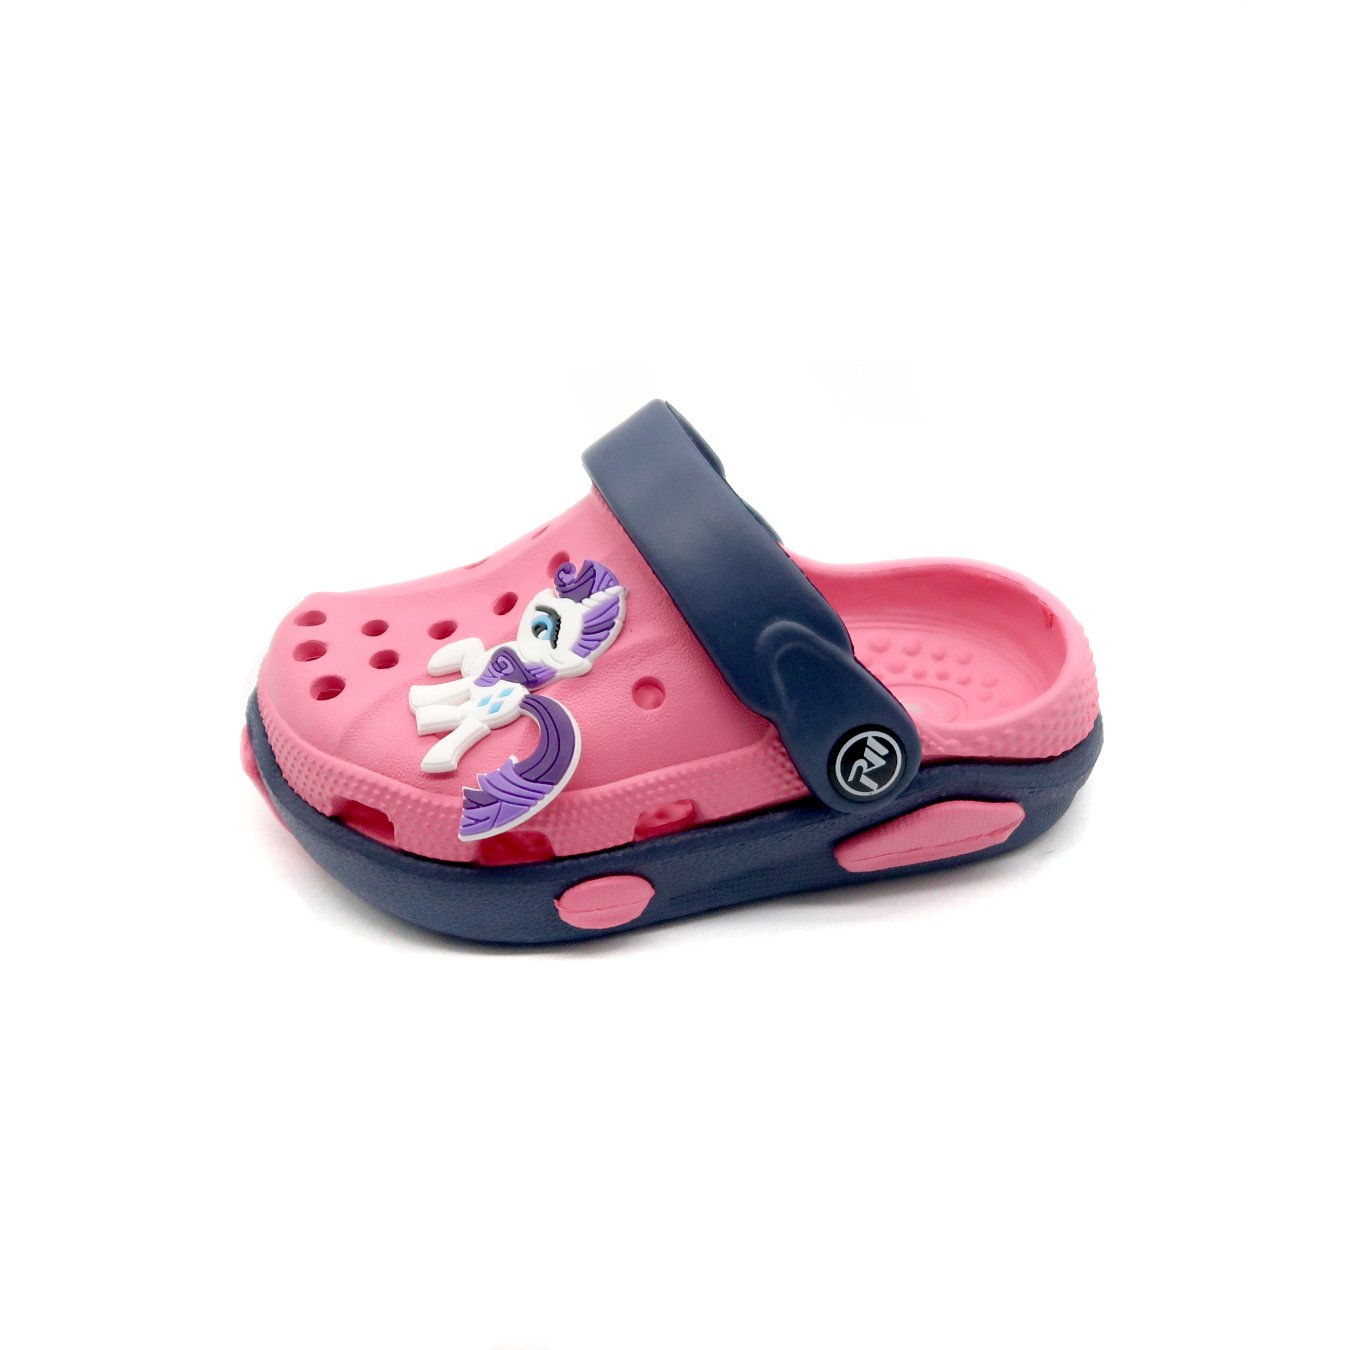 Hot sale Children Eva Garden Child Clogs Shoes Sandals Slippers Kids